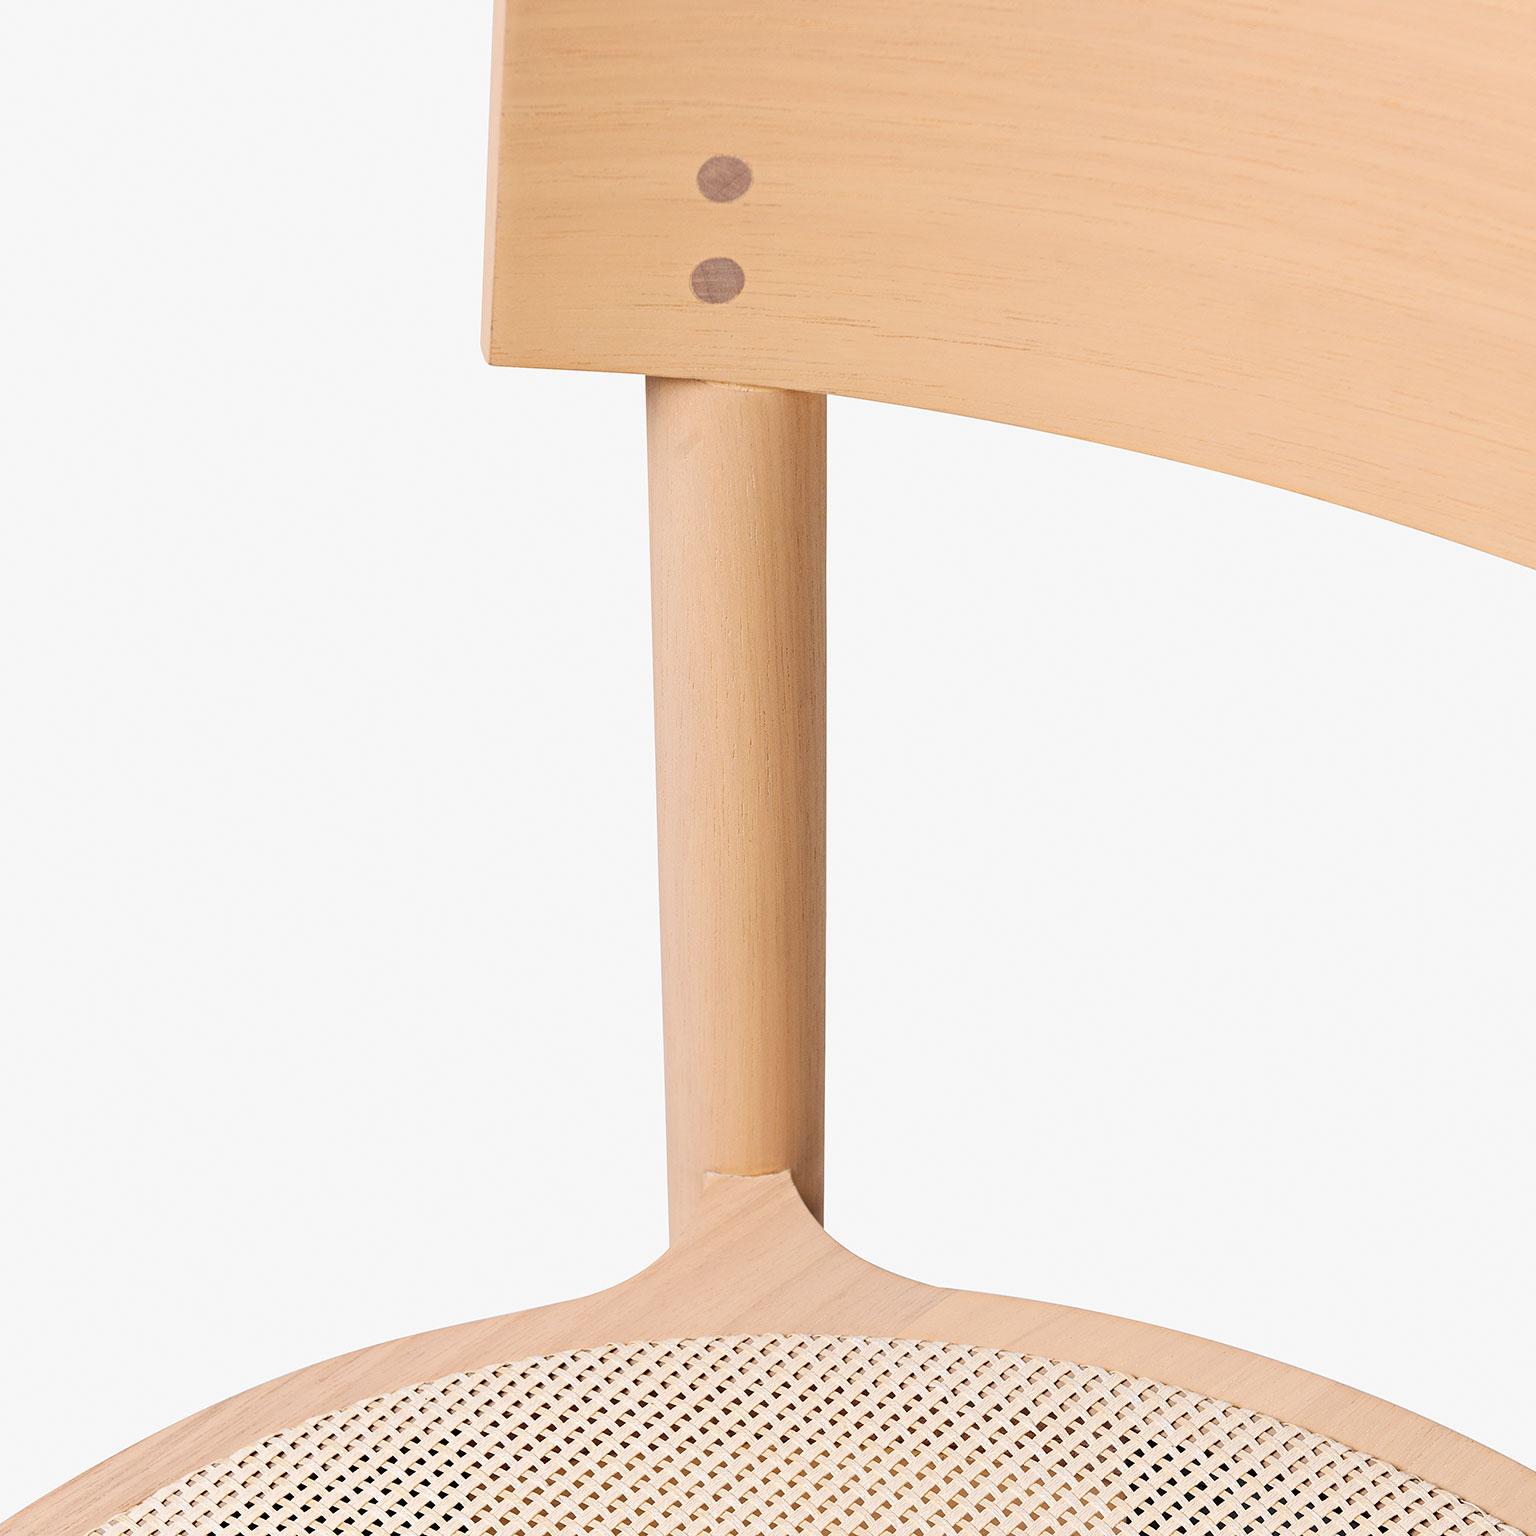 Minimalist Gravatá Chair in Bleached Tauari Wood by Wentz, Brazilian Contemporary Design For Sale